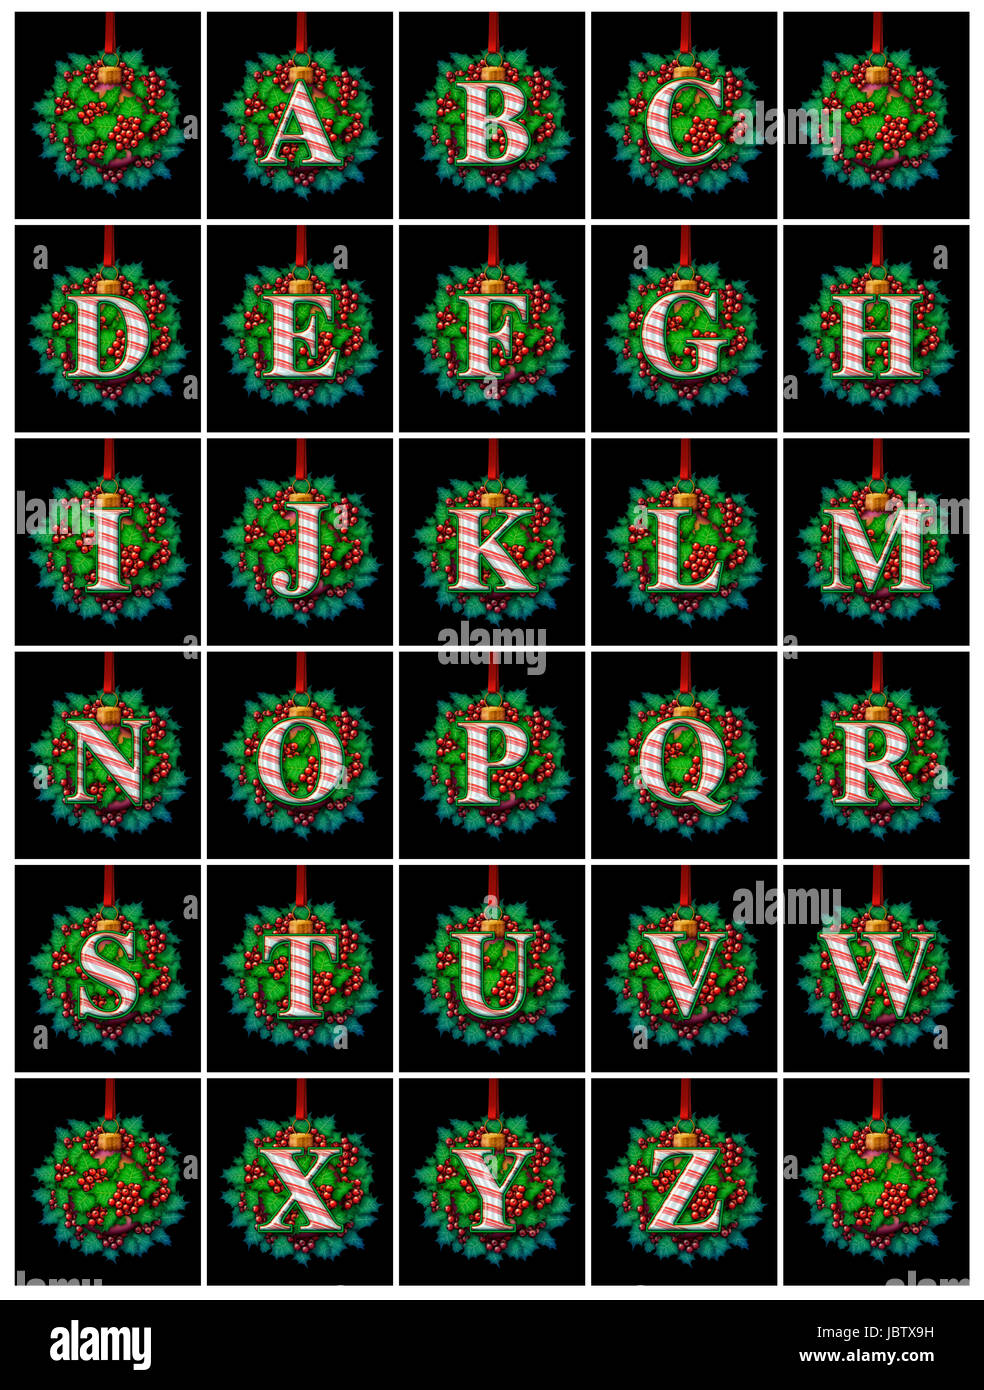 https://c8.alamy.com/comp/JBTX9H/a-candy-cane-alphabet-made-out-of-holly-and-glass-ball-ornaments-JBTX9H.jpg